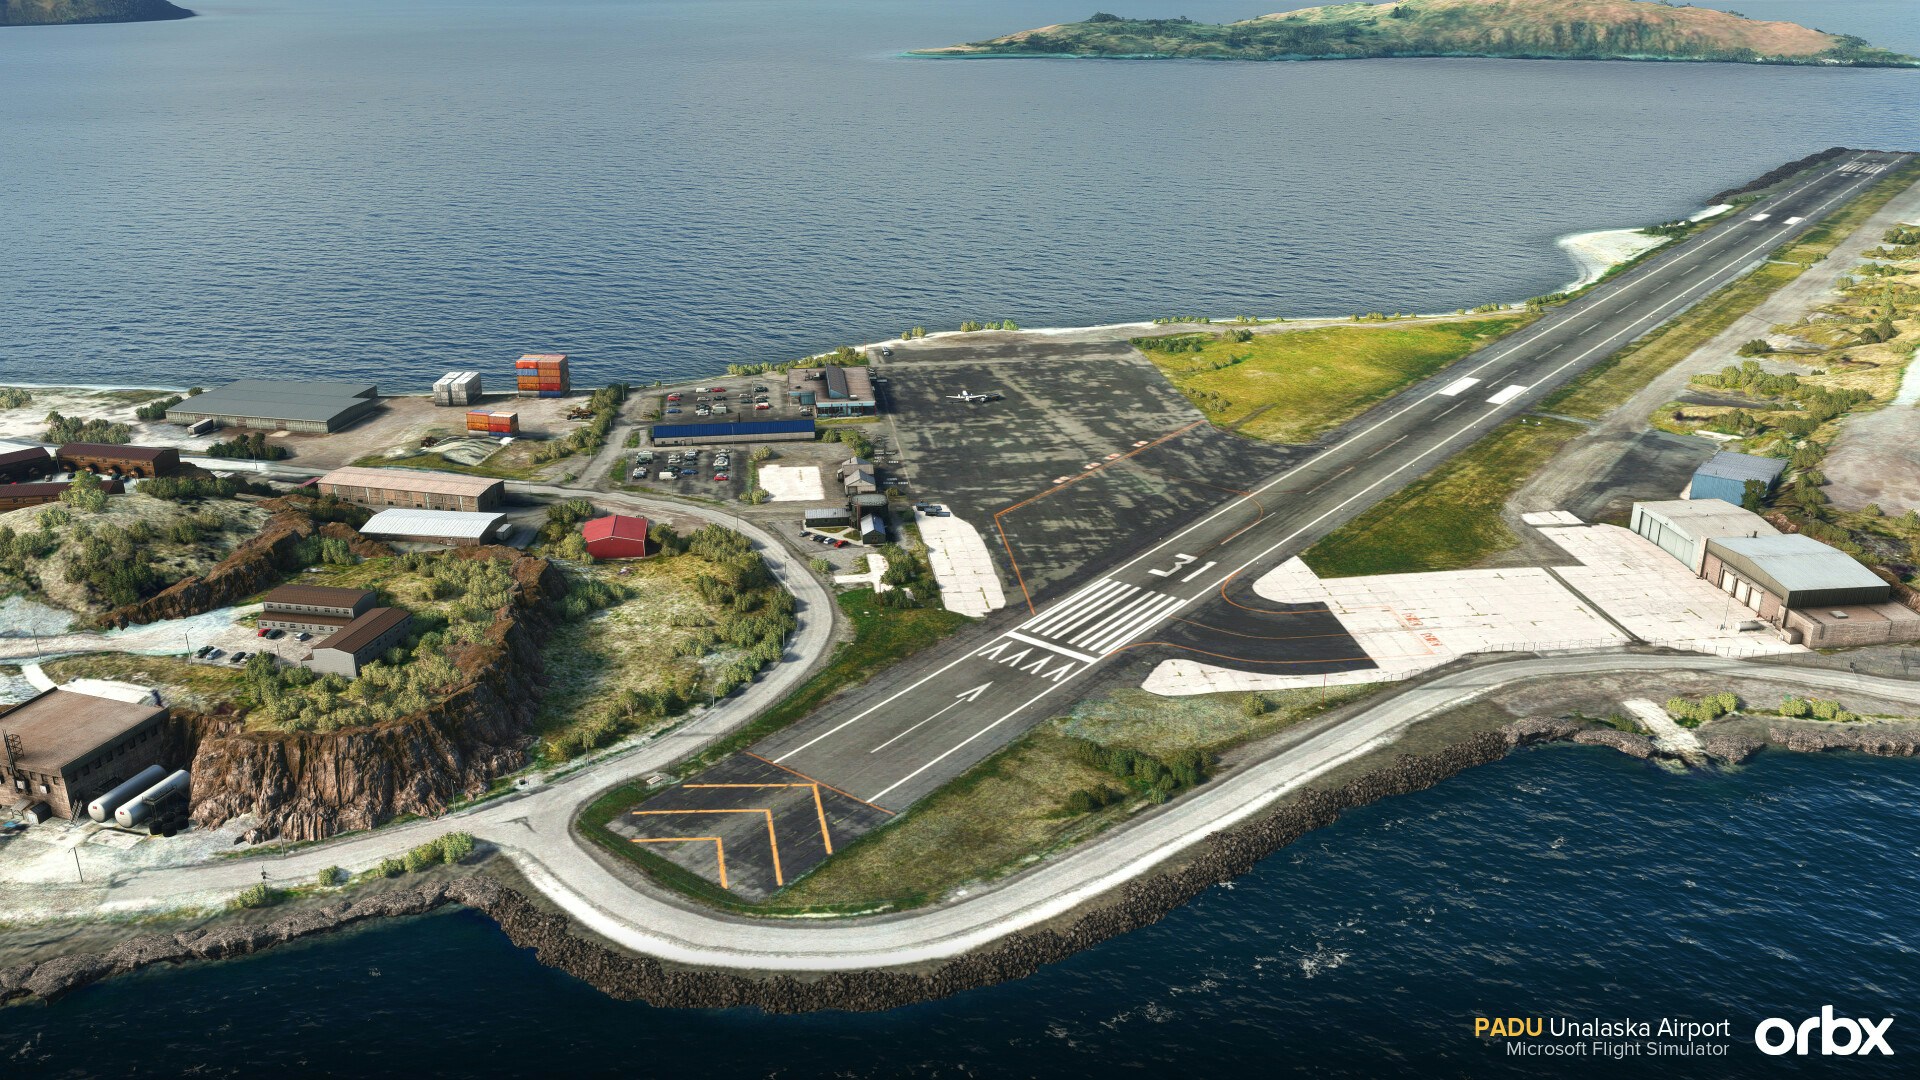 Orbx announces Unalaska Airport for MSFS